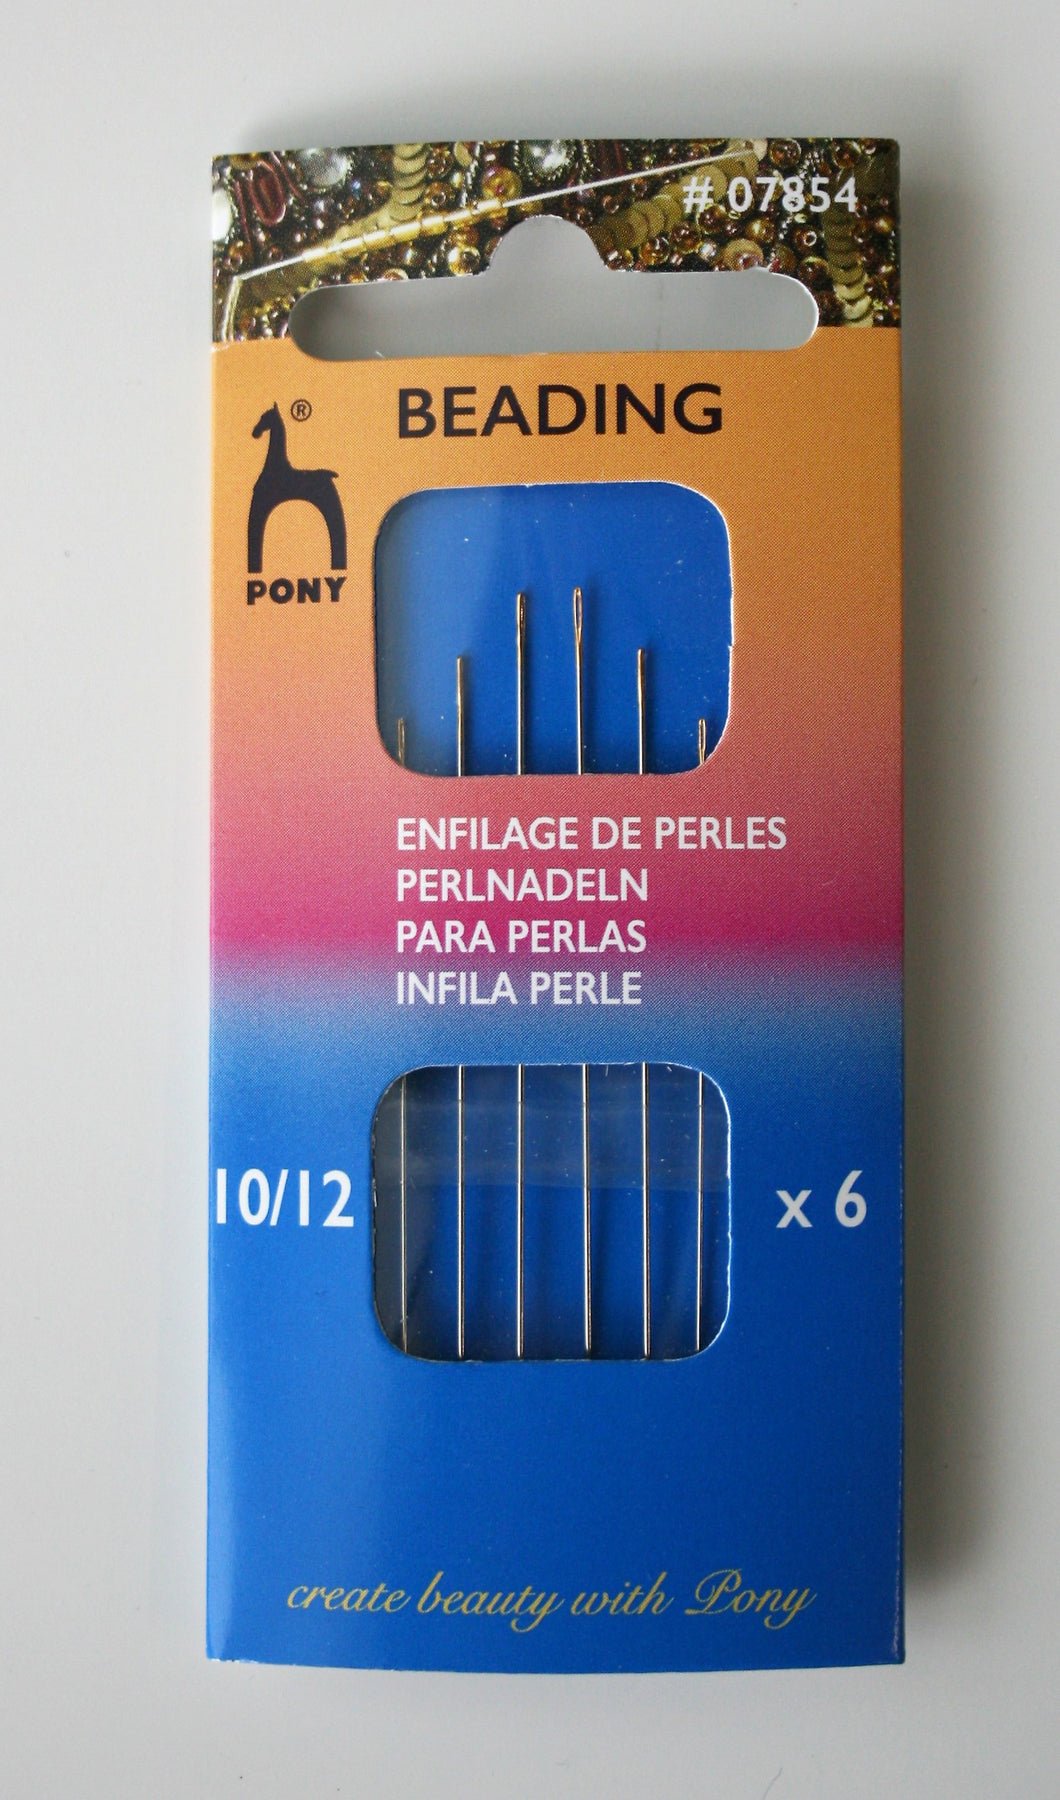 Beading Needles - 6 pack